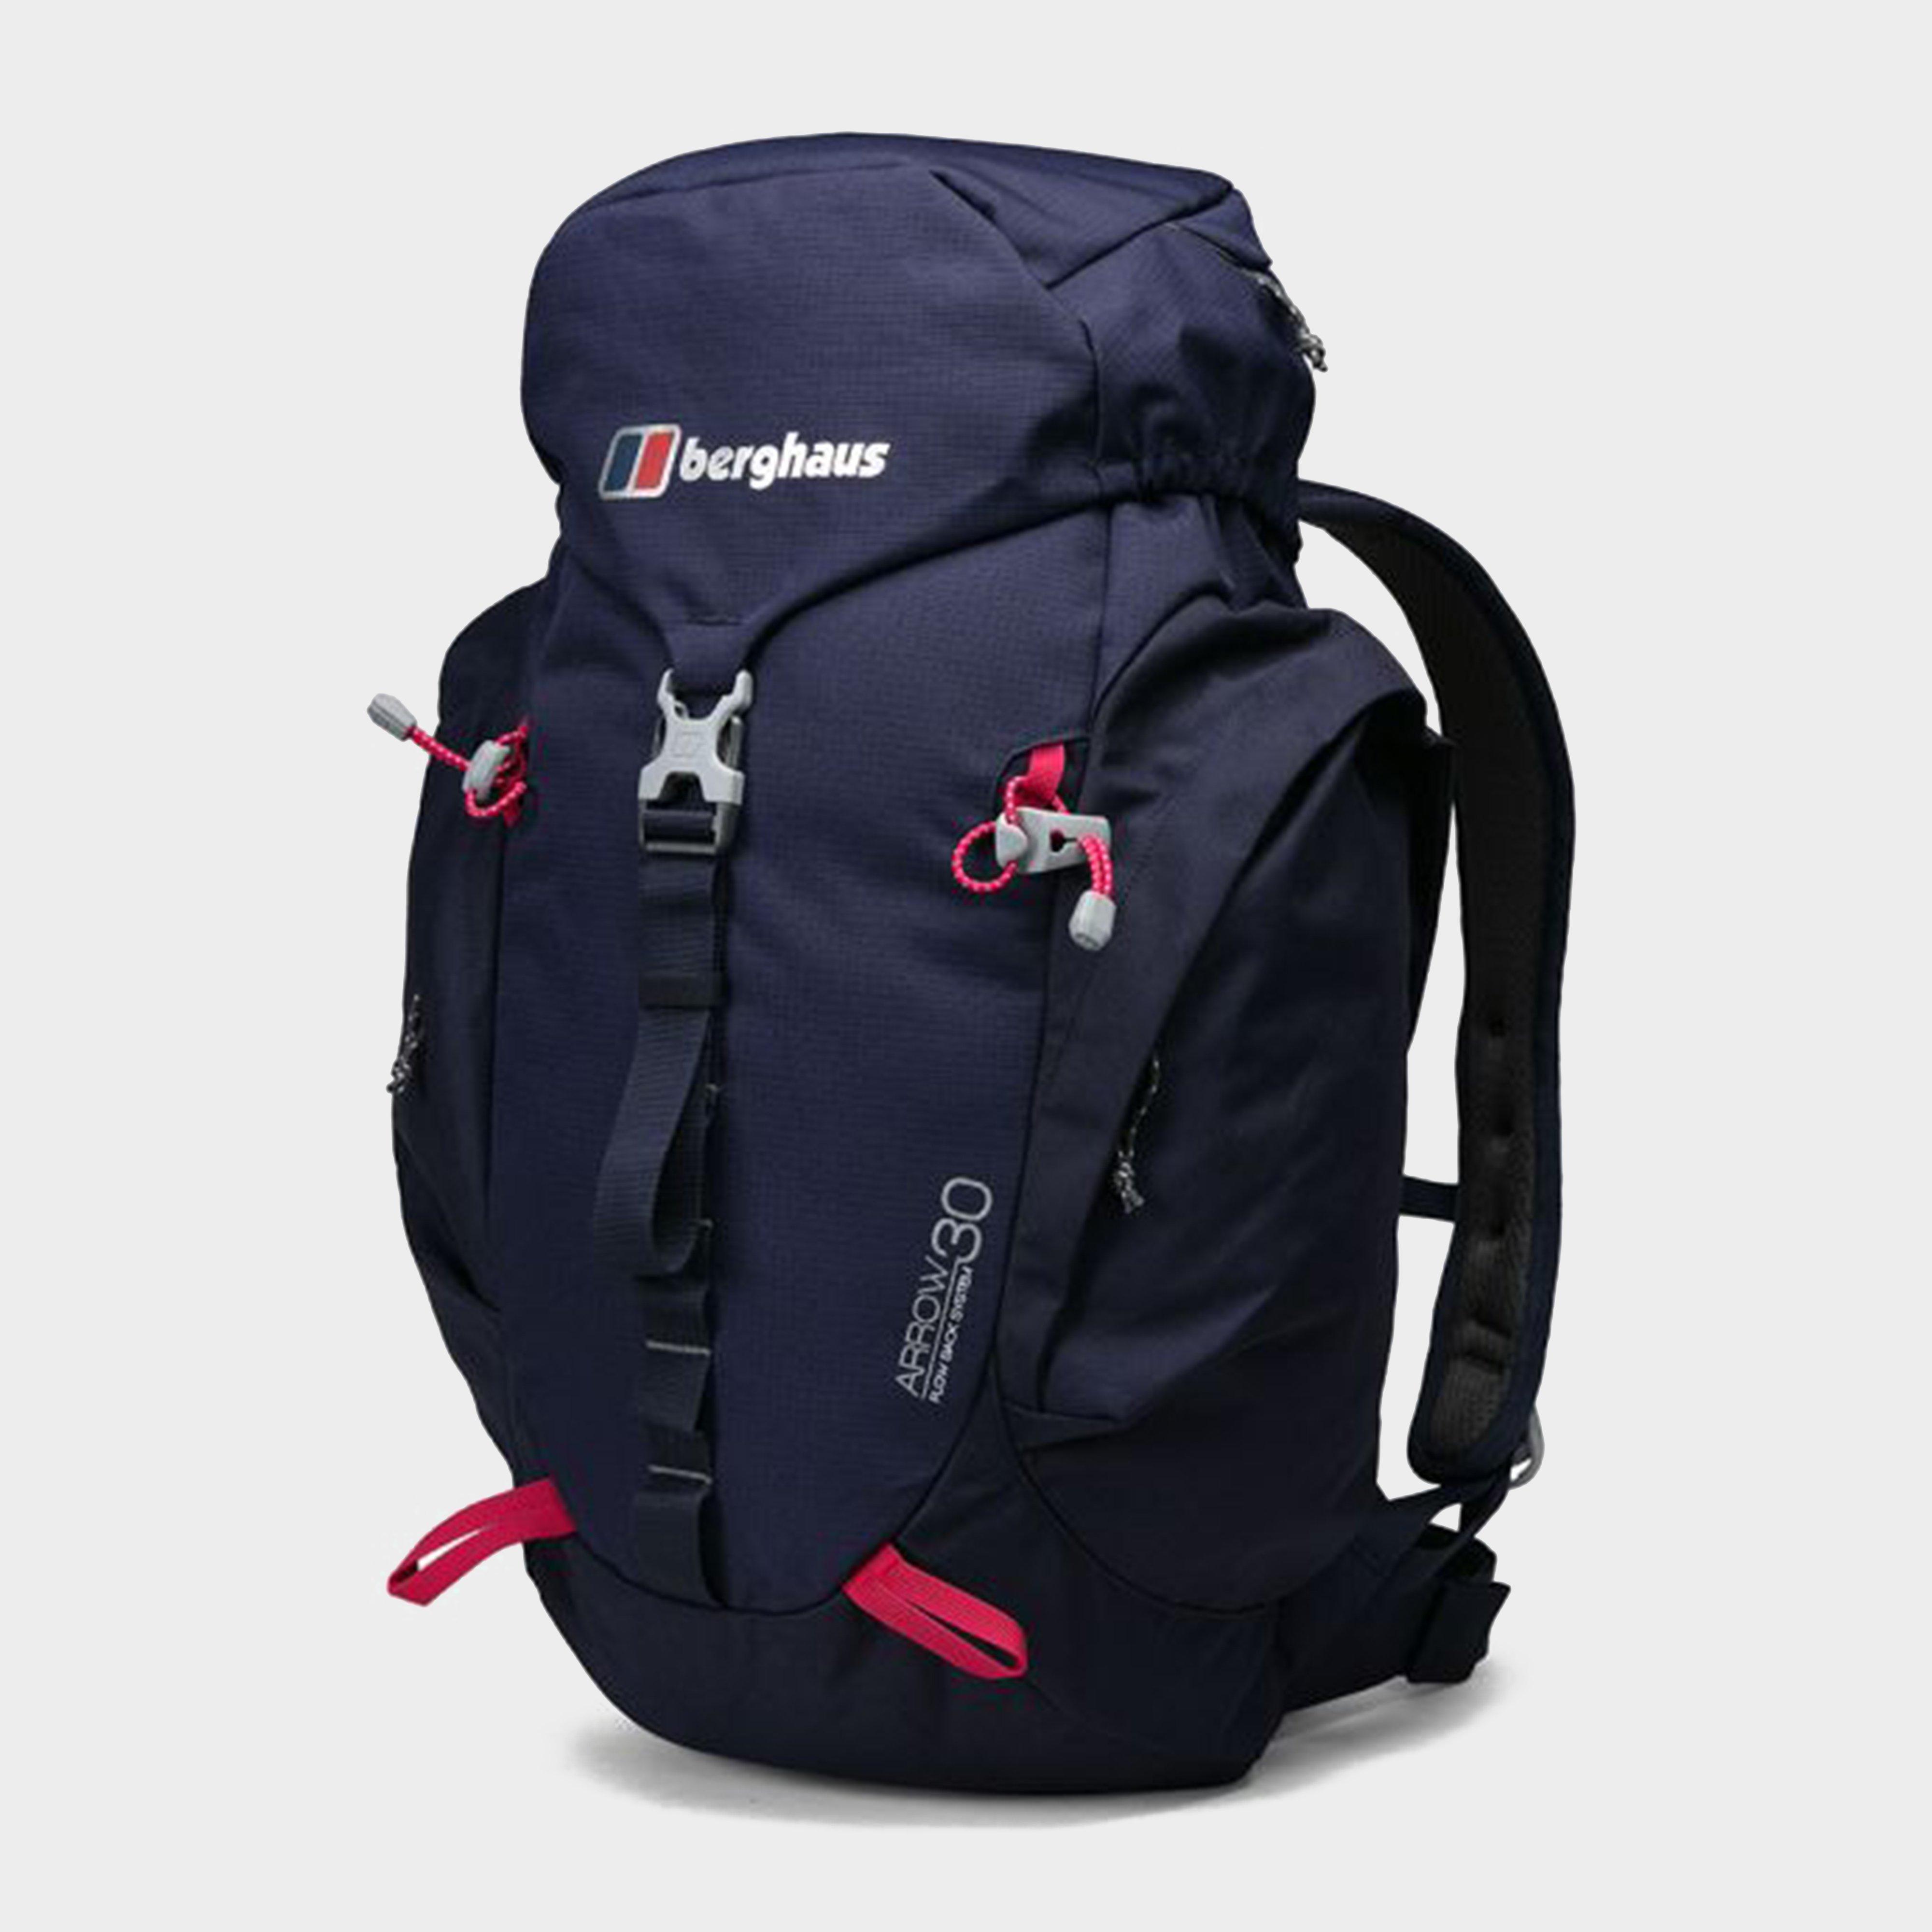 Berghaus Arrow 30 Backpack - Navy/navy  Navy/navy